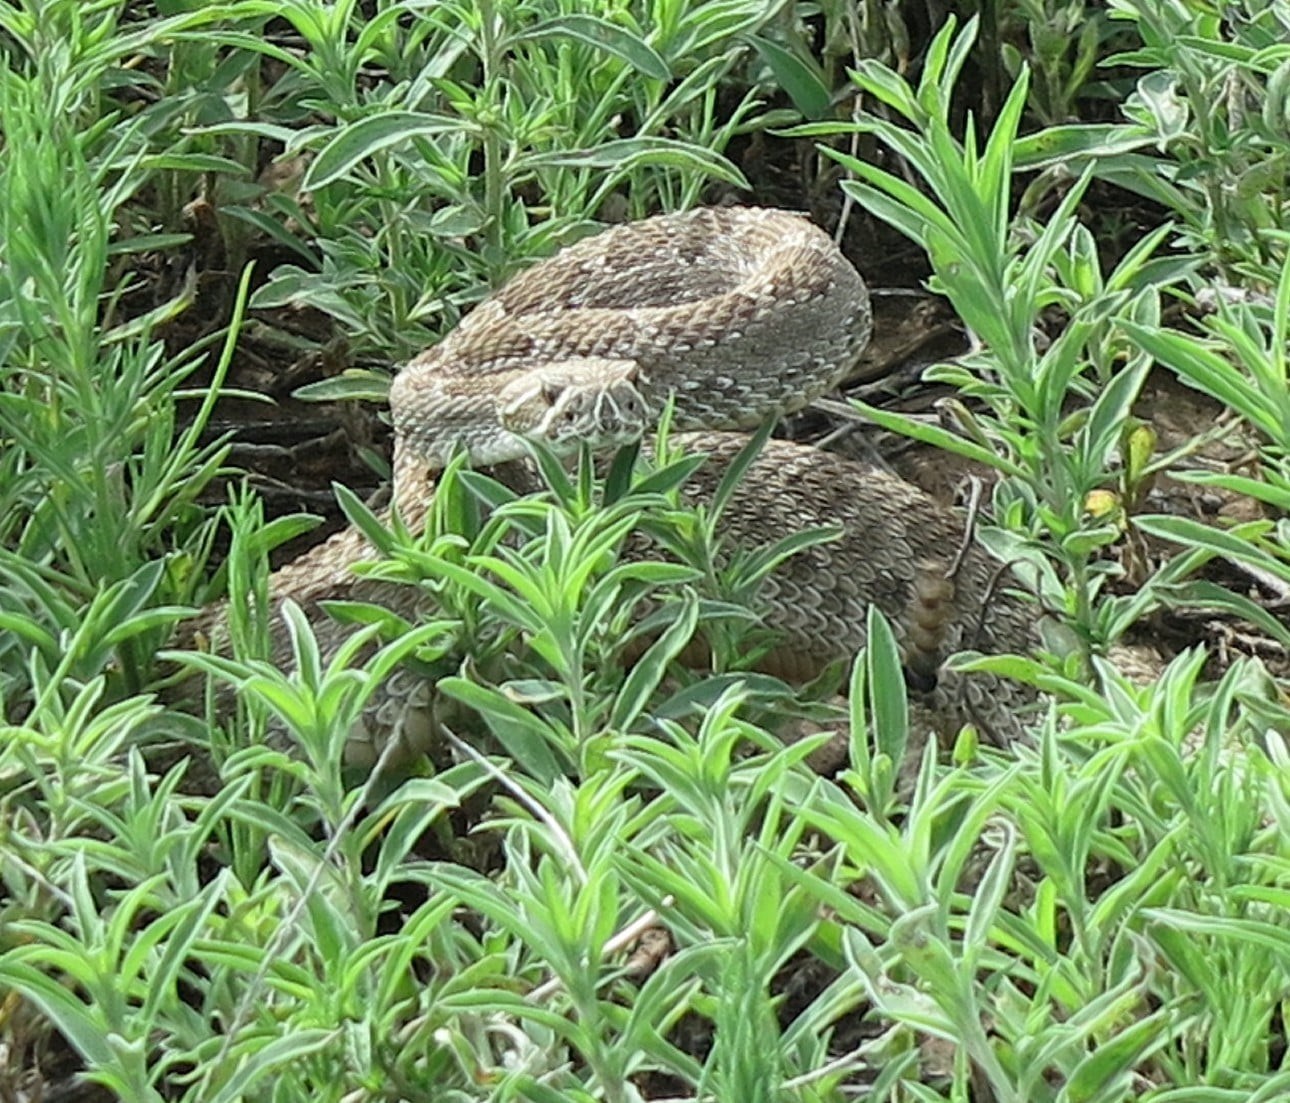 A Prairie Rattlesnake coiled in green grass.